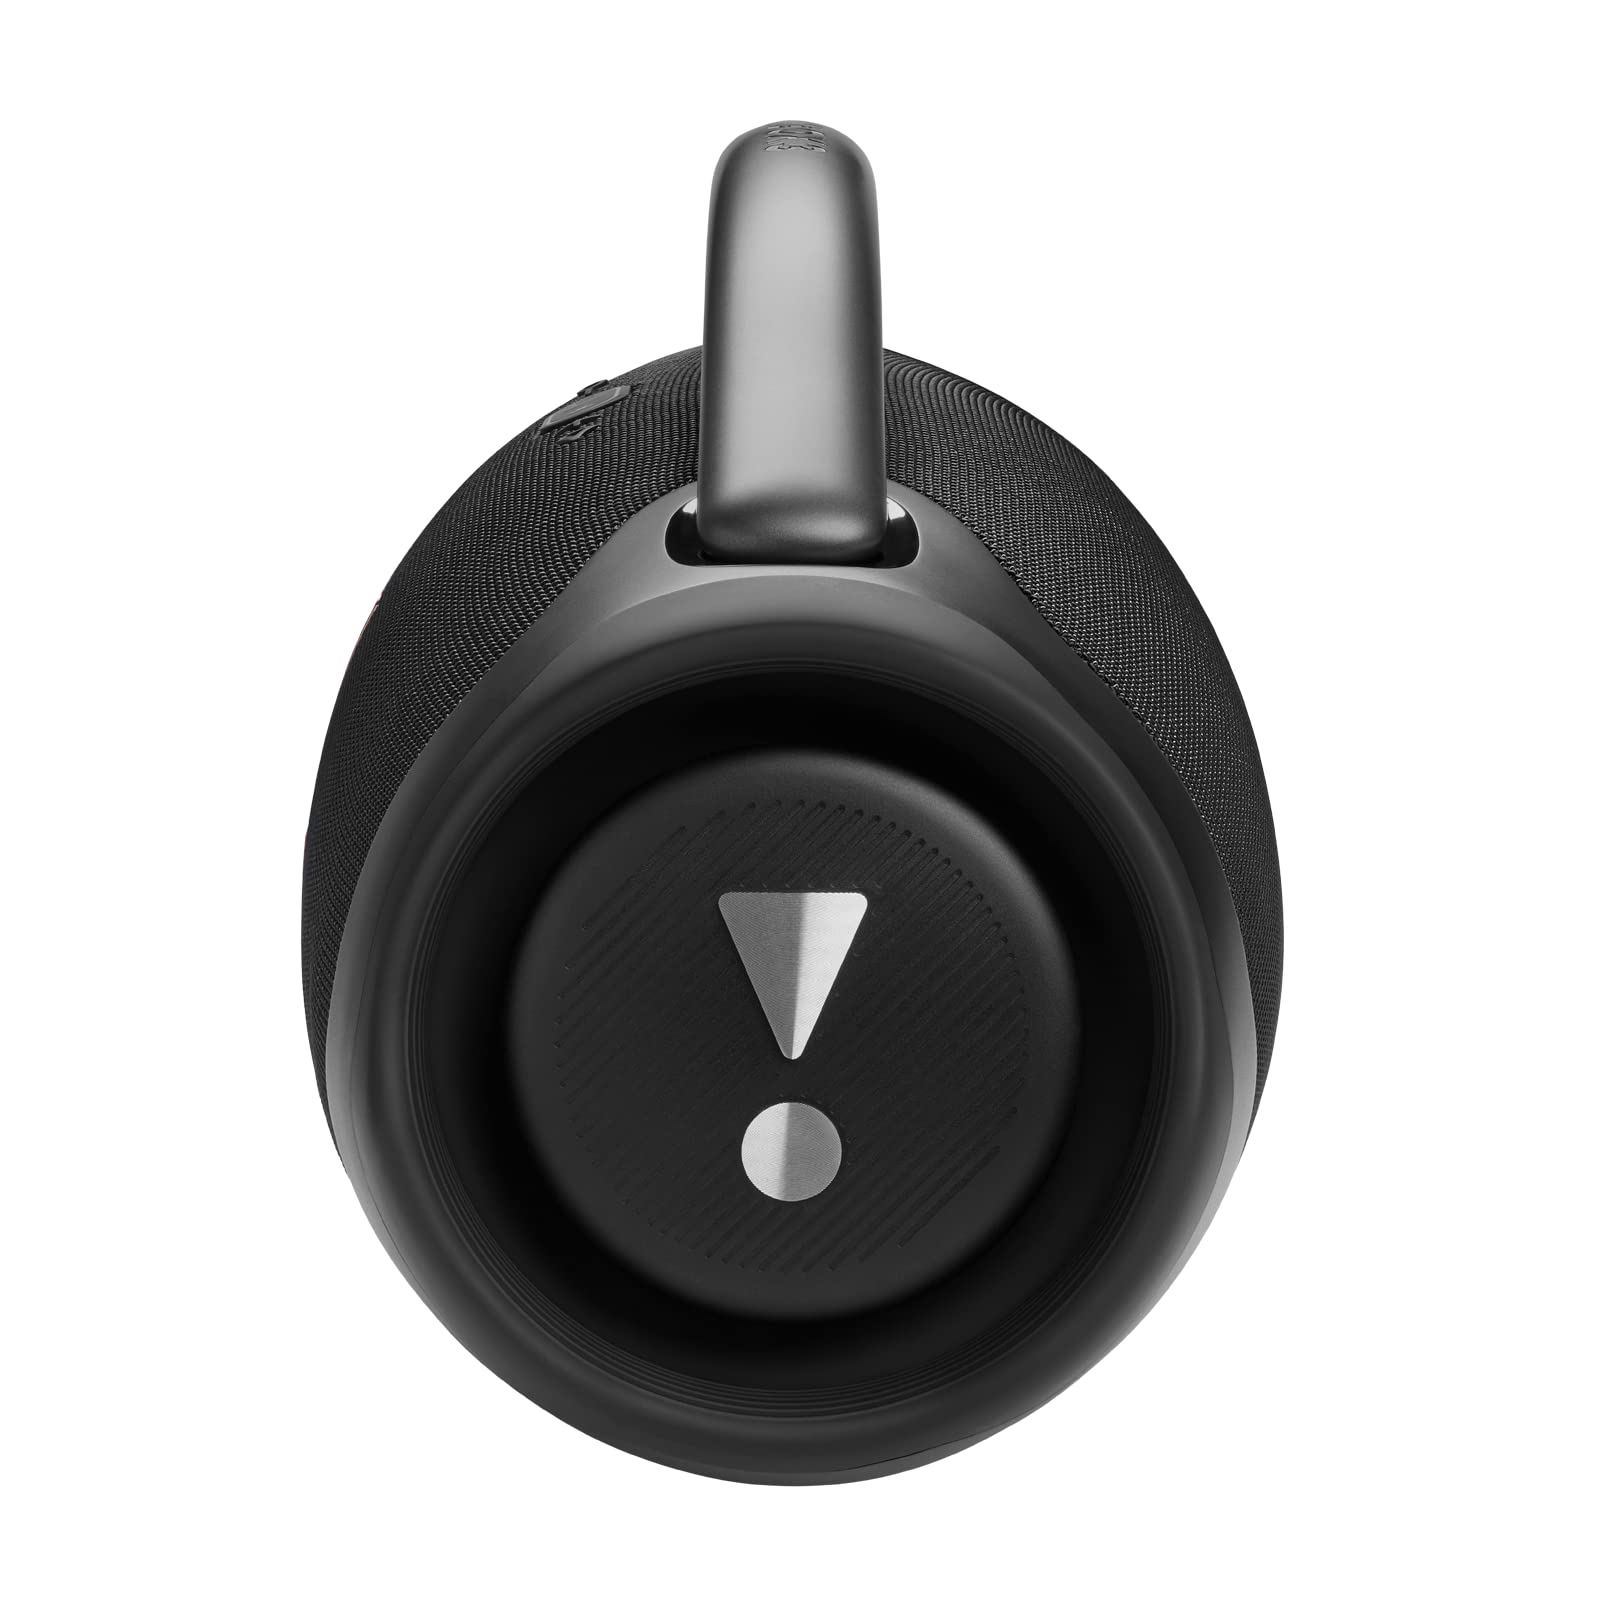 JBL Boombox 3 - Portable Bluetooth Speaker, Powerful Sound and Monstrous bass, IPX7 Waterproof, 24 Hours of Playtime, powerbank, JBL PartyBoost for Speaker Pairing (Black) (Renewed)